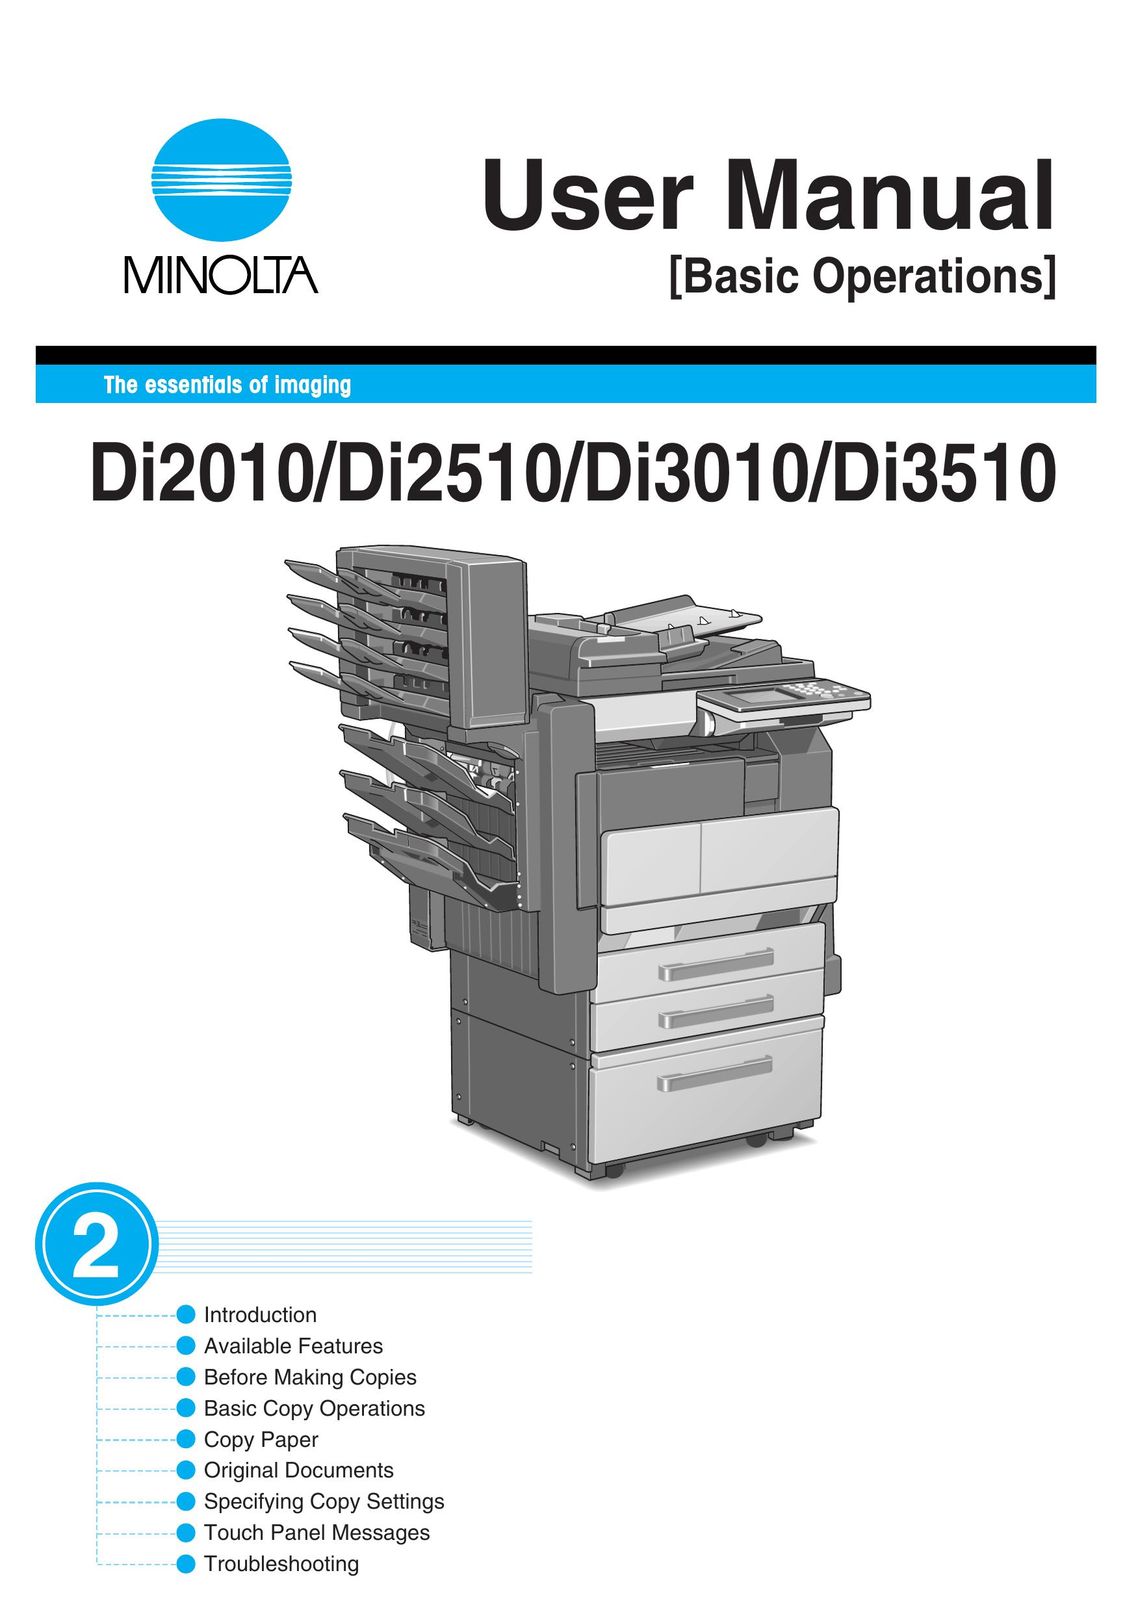 Minolta DI3010 Network Hardware User Manual